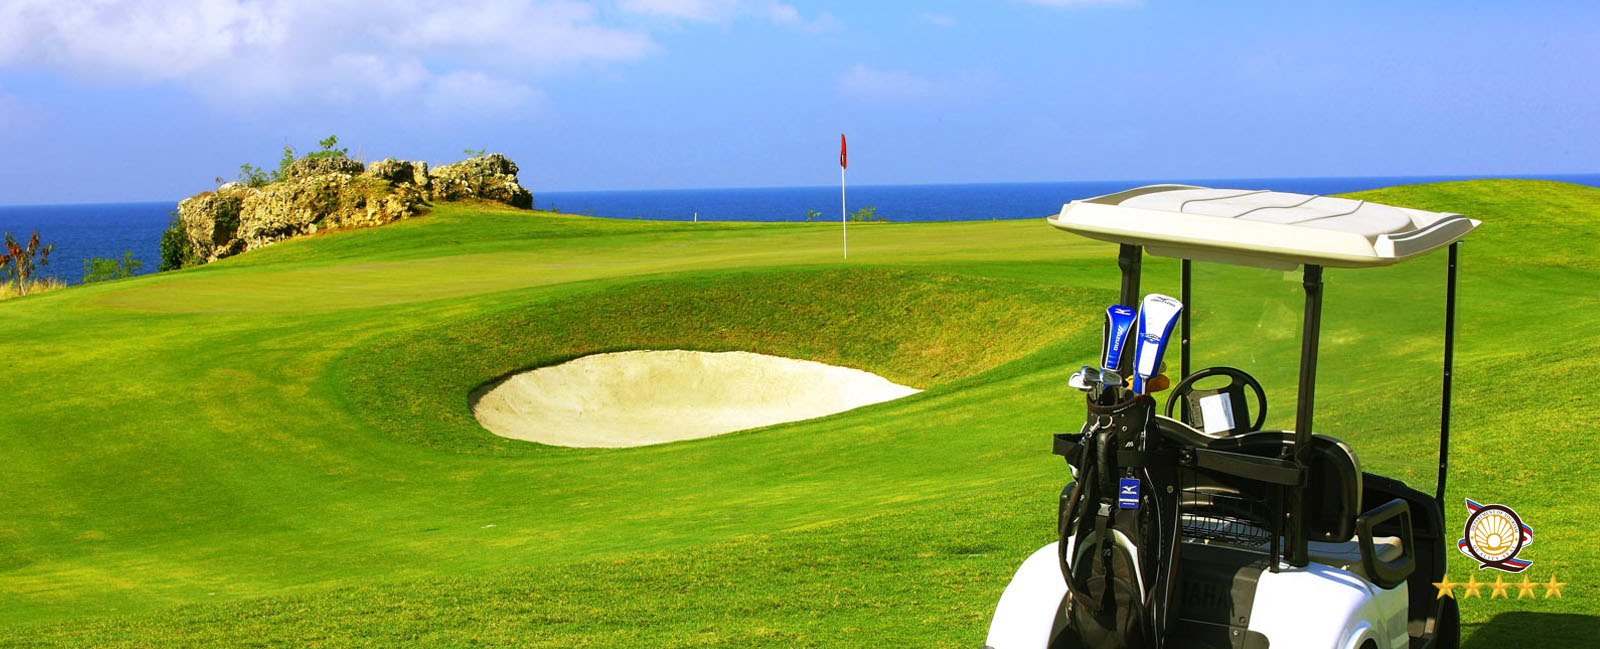 Philippines Golfing - The Top Ten Courses